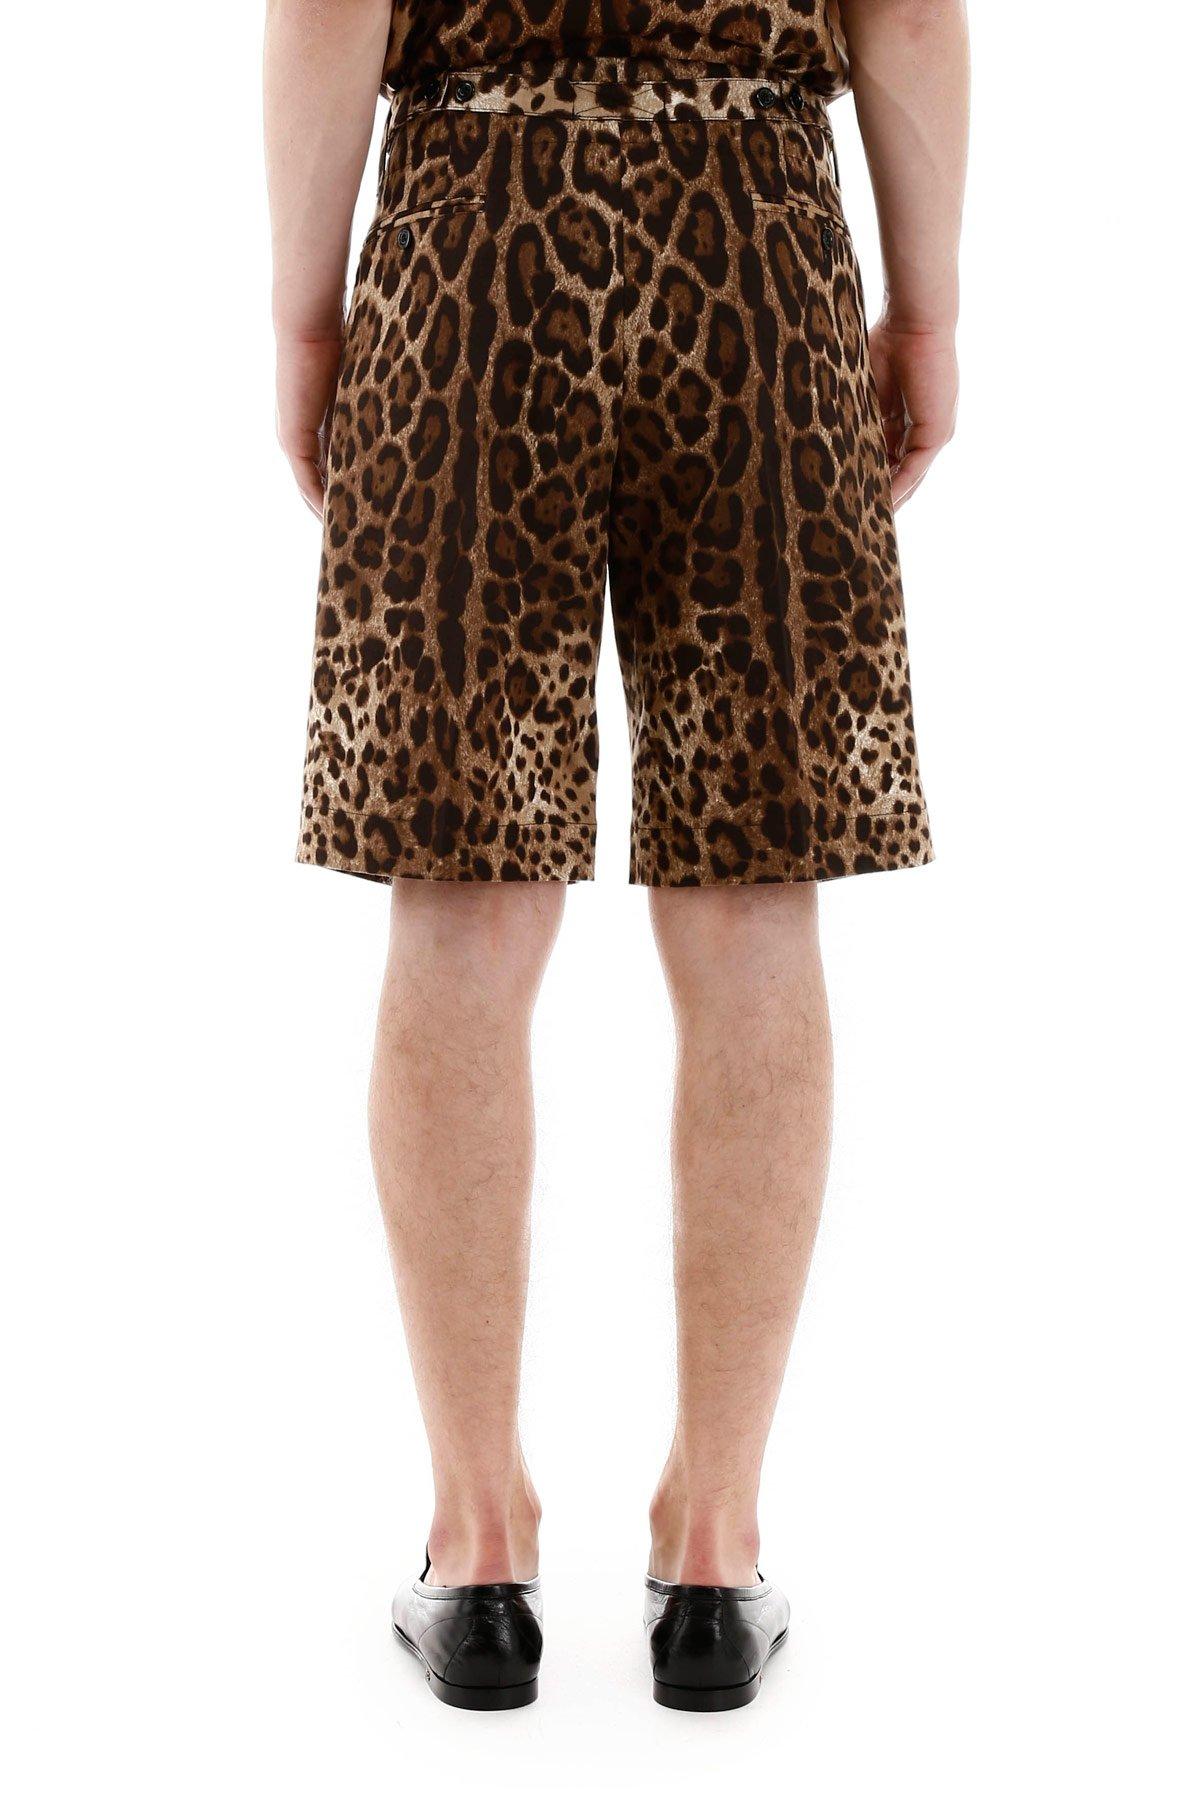 Dolce & Gabbana Cotton Animal Print Bermuda Shorts in Brown for Men - Lyst